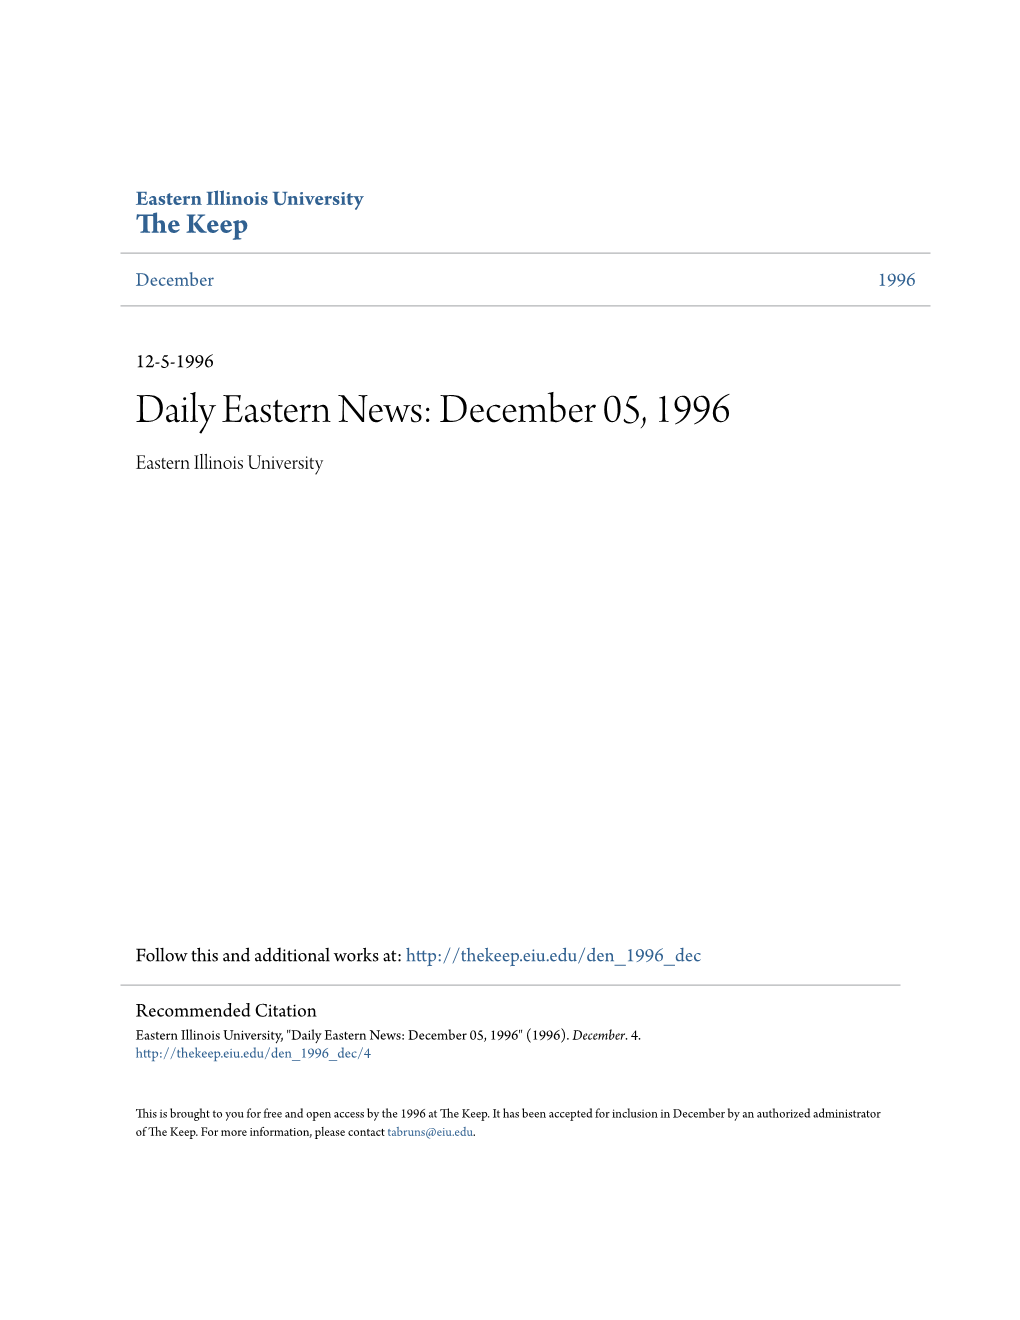 Daily Eastern News: December 05, 1996 Eastern Illinois University